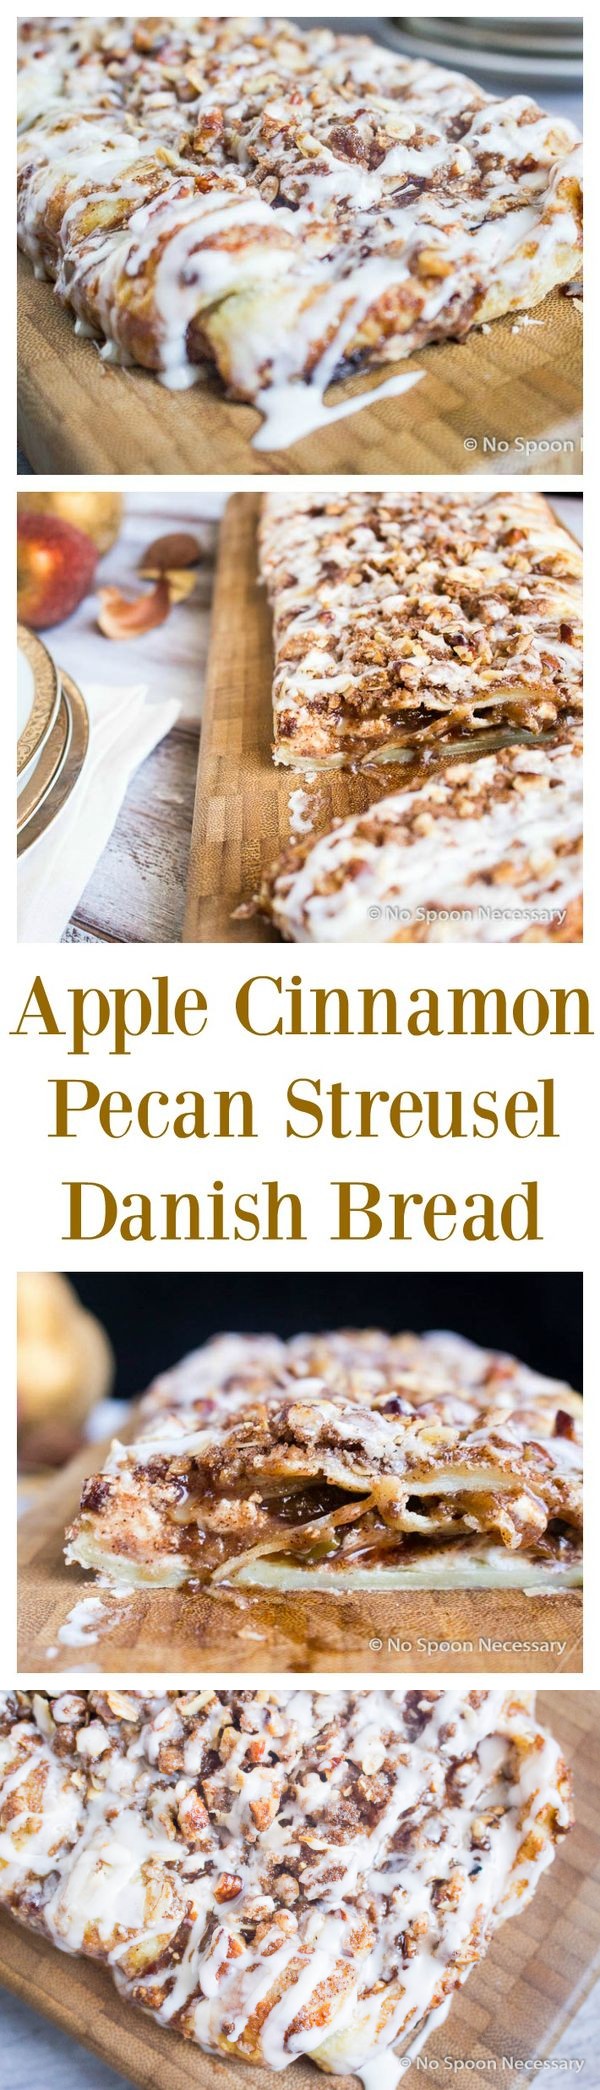 Apple Cinnamon Pecan Streusel Danish Bread